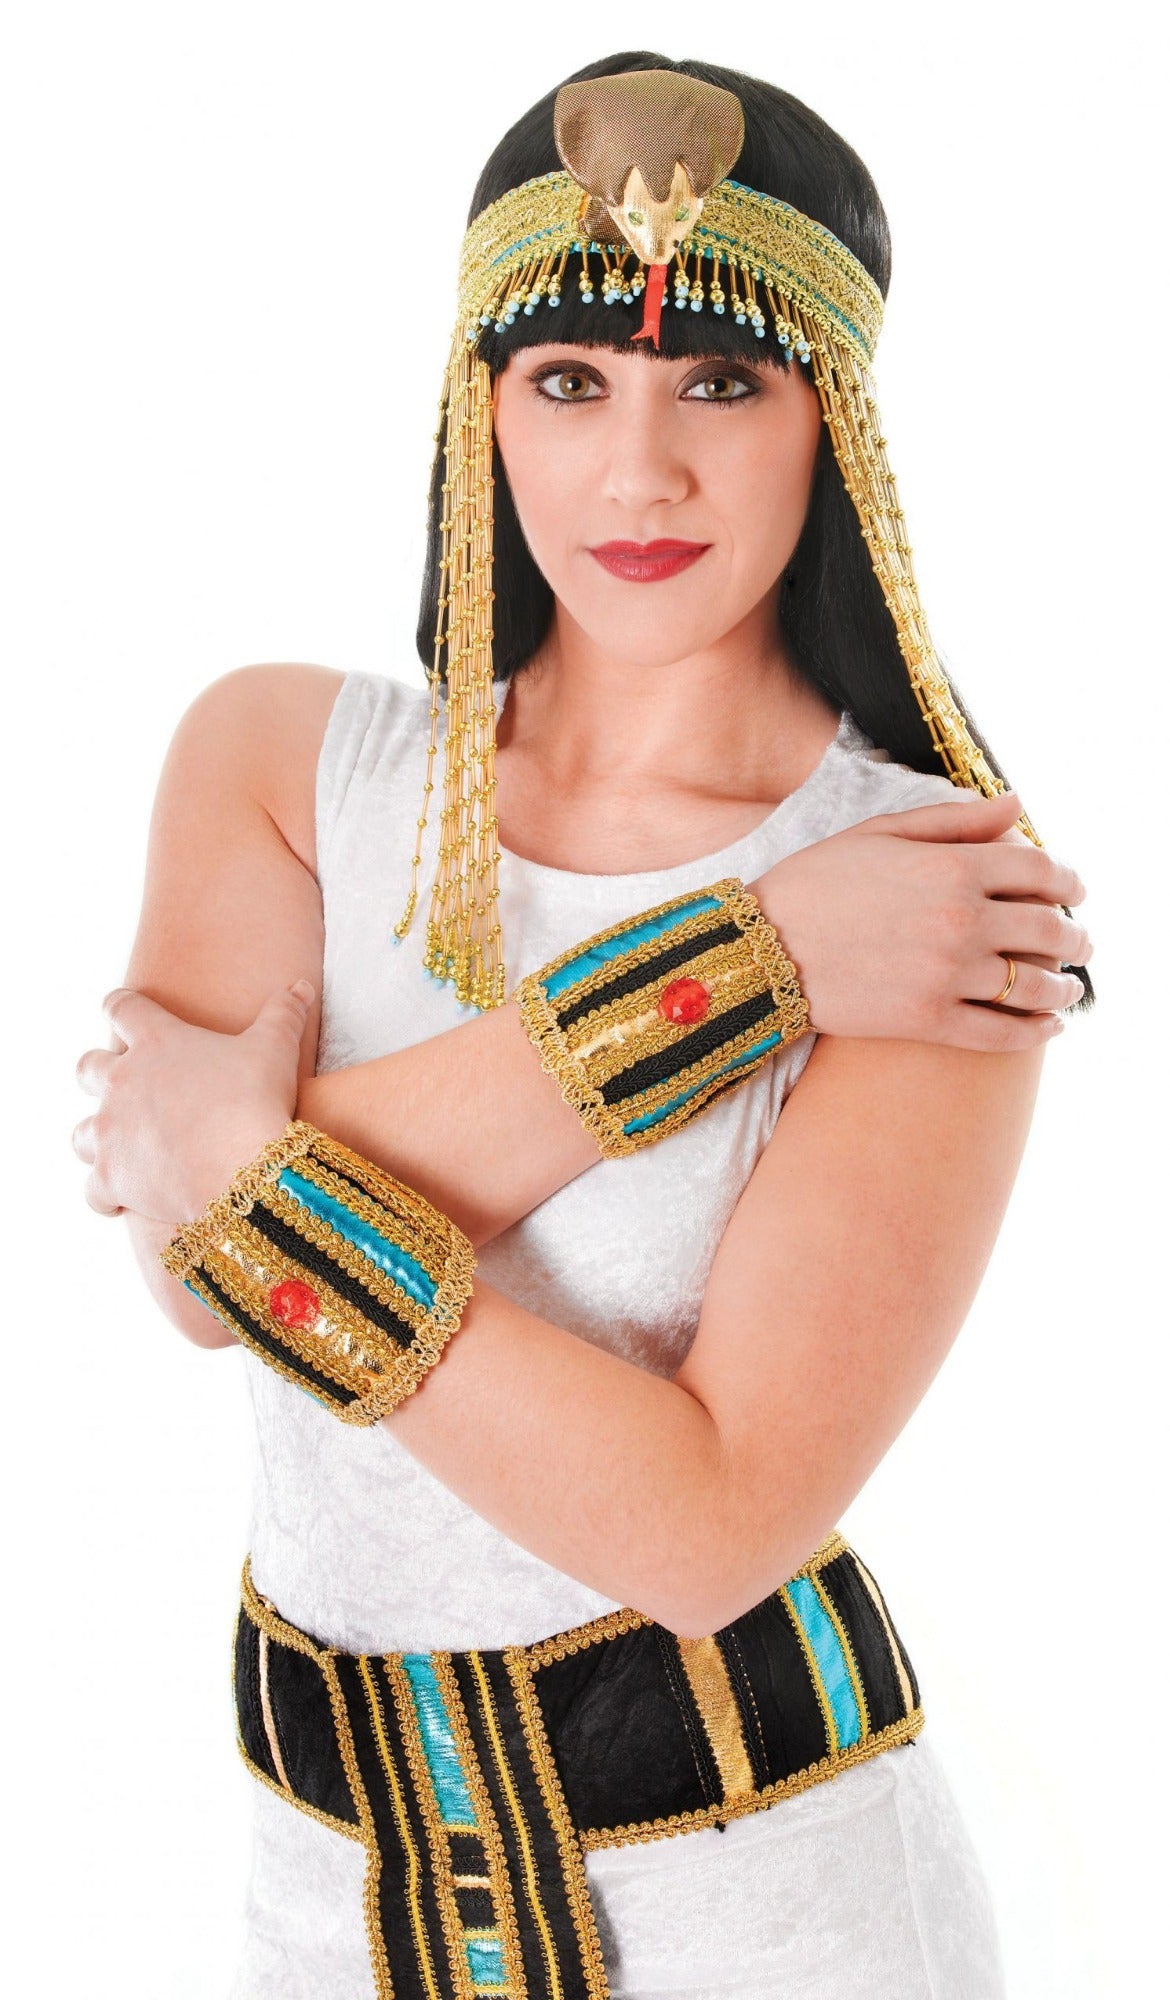 Egyptian Cleopatra Wrist Bands